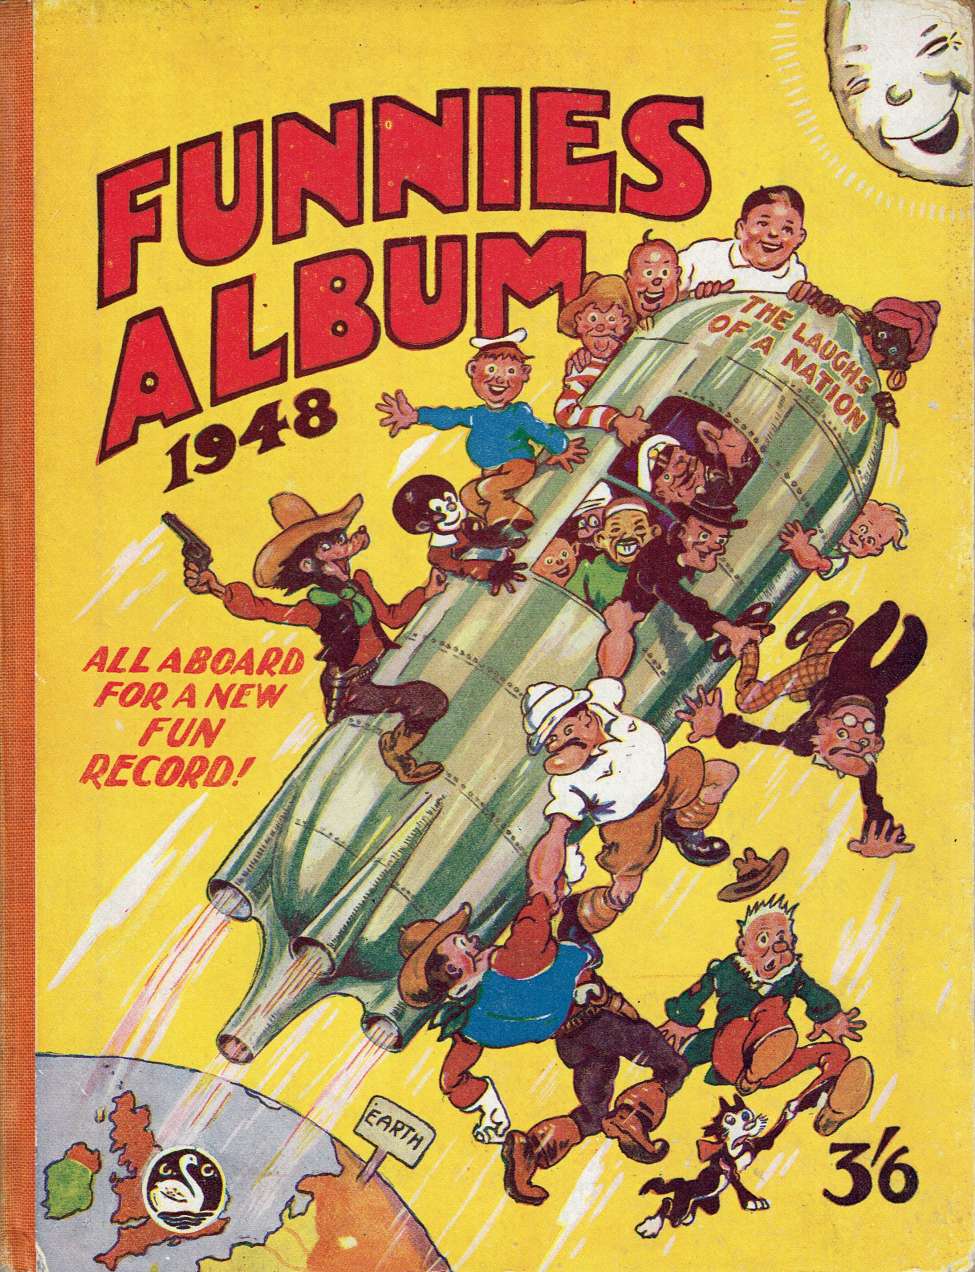 Comic Book Cover For Funnies Album 1948 Part 1 - Version 2